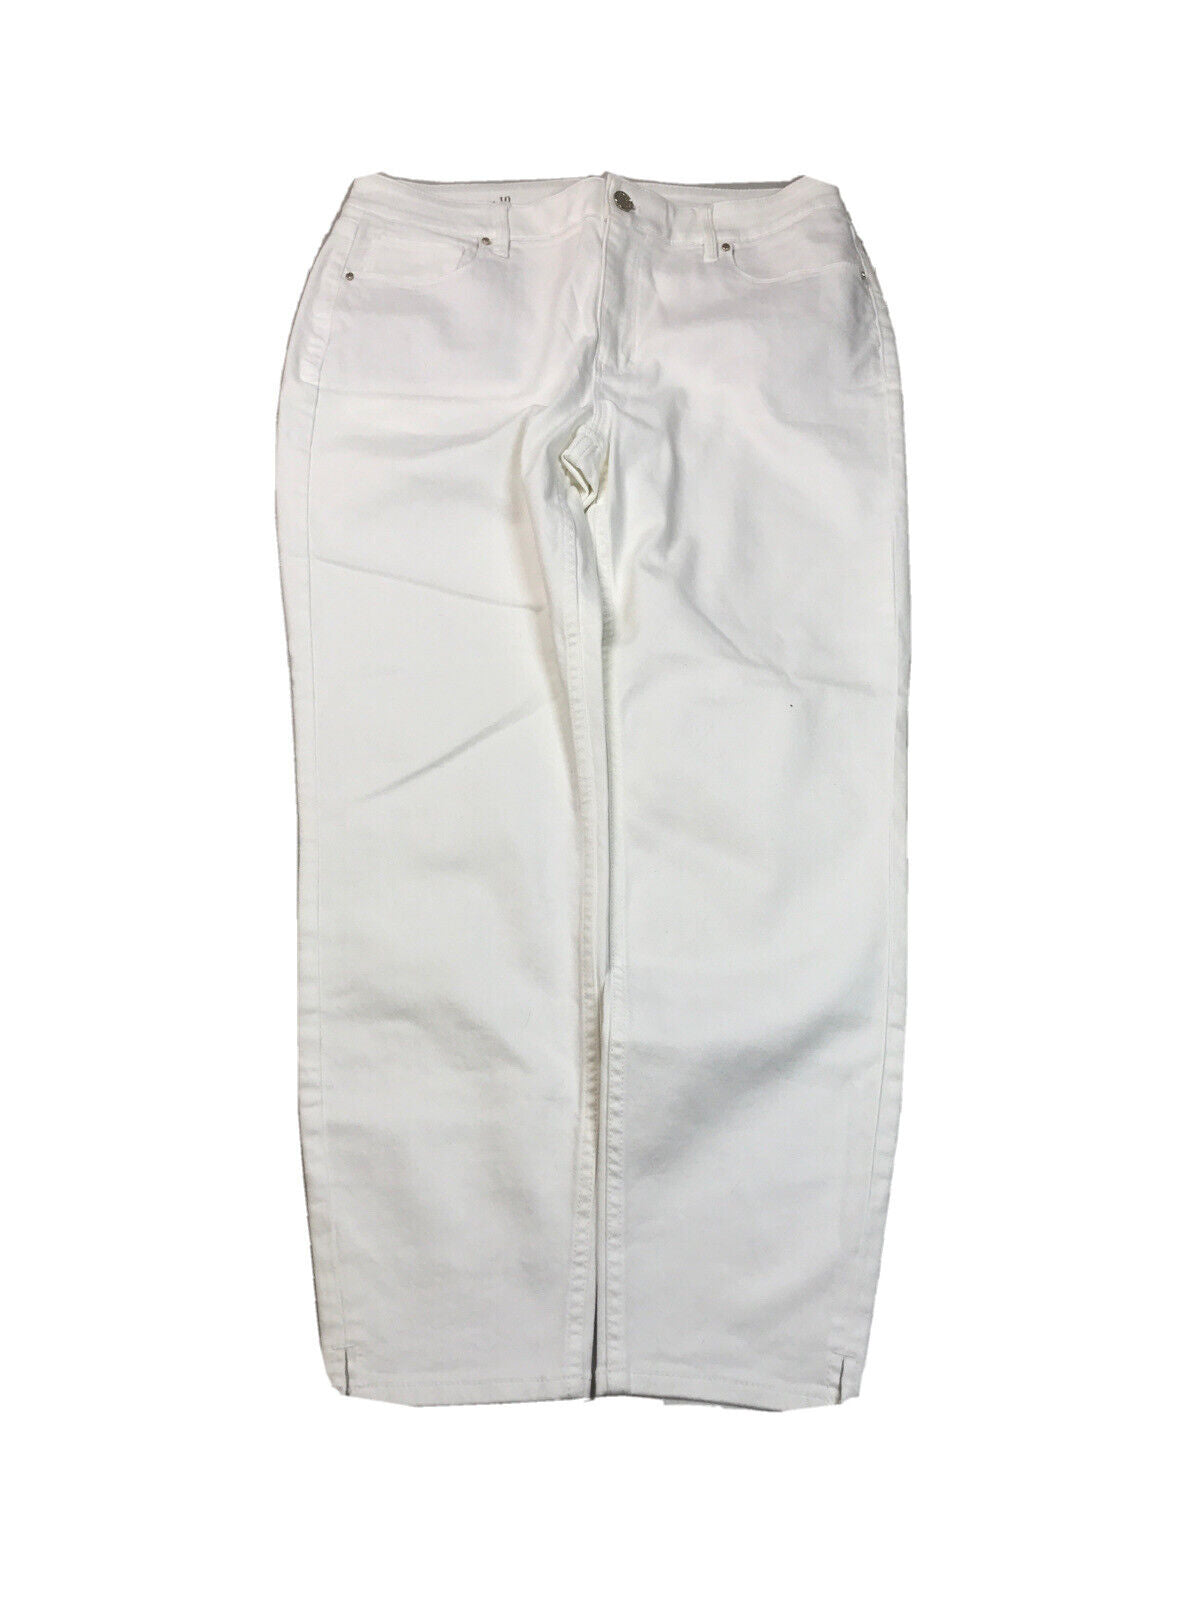 White House Black Market Women's White Skinny Crop High Rise Jeans - 10